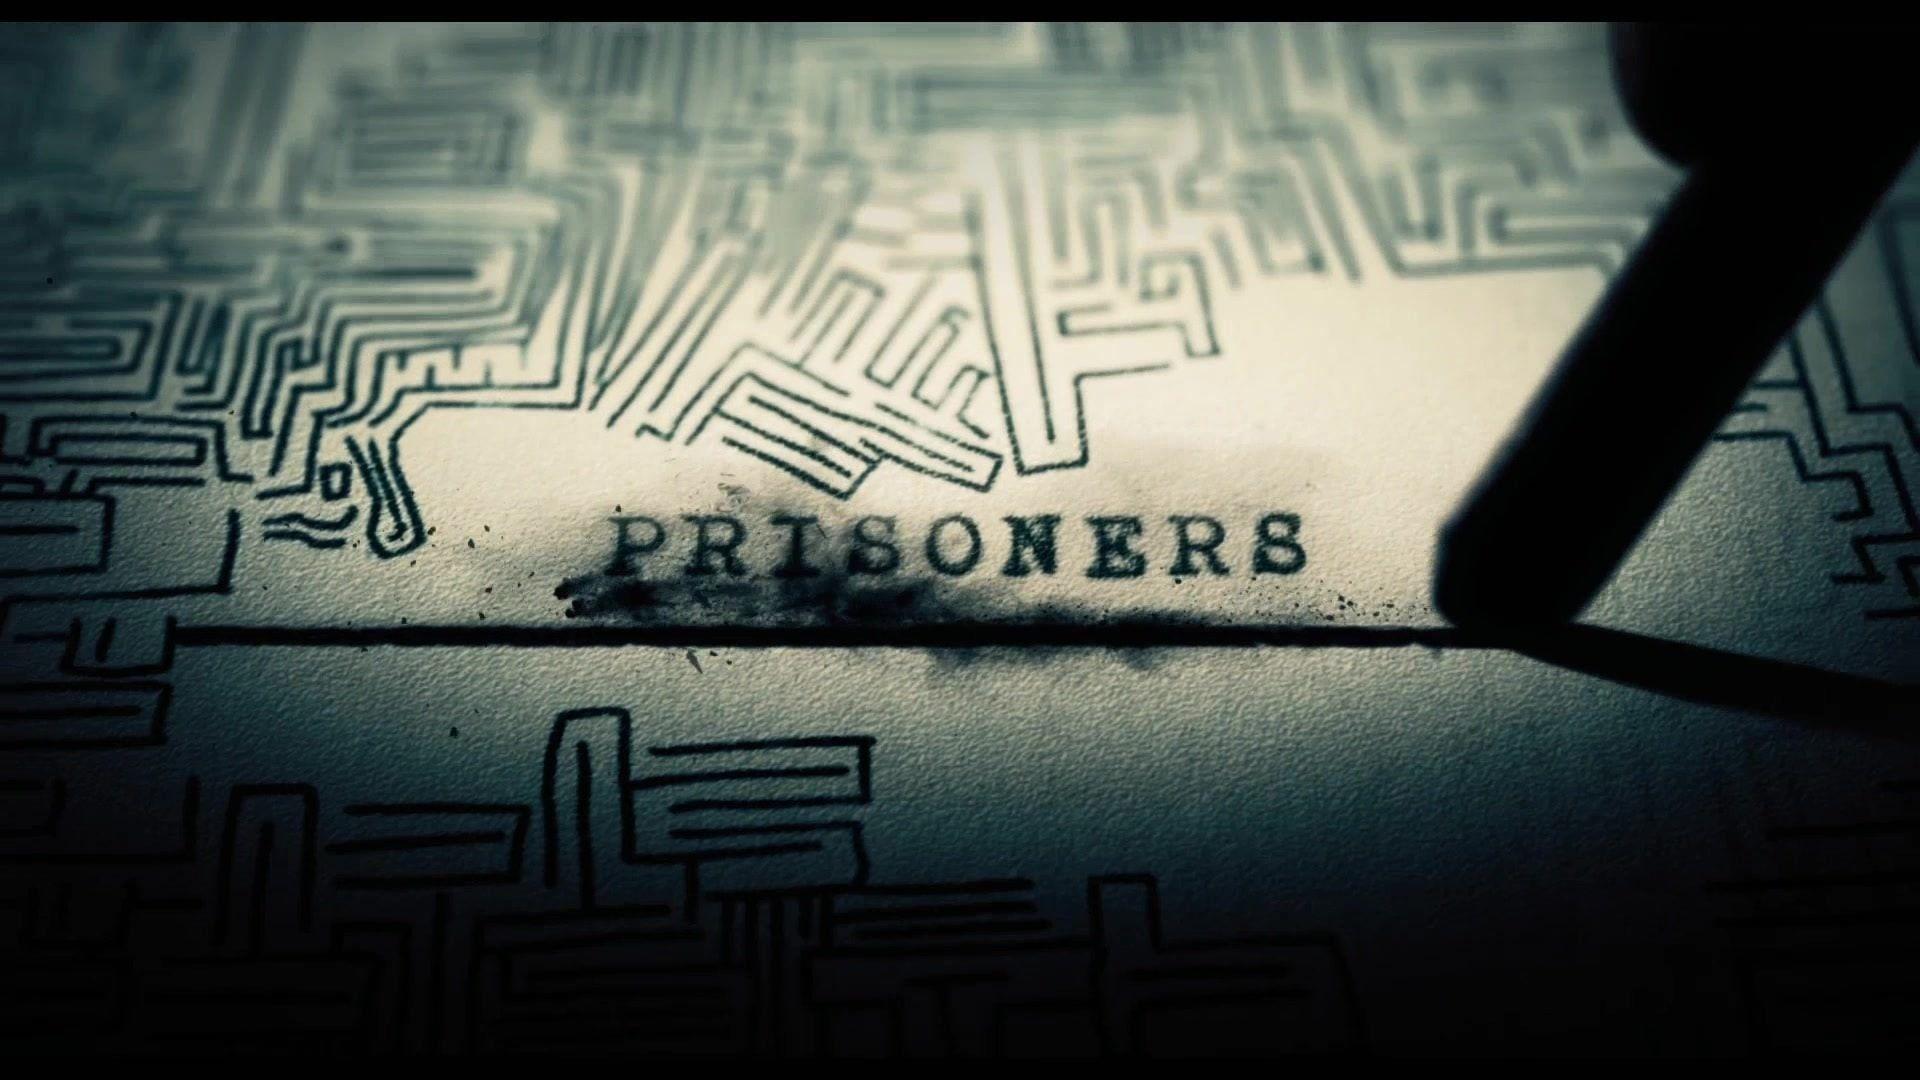 زندانیان (Prisoners)